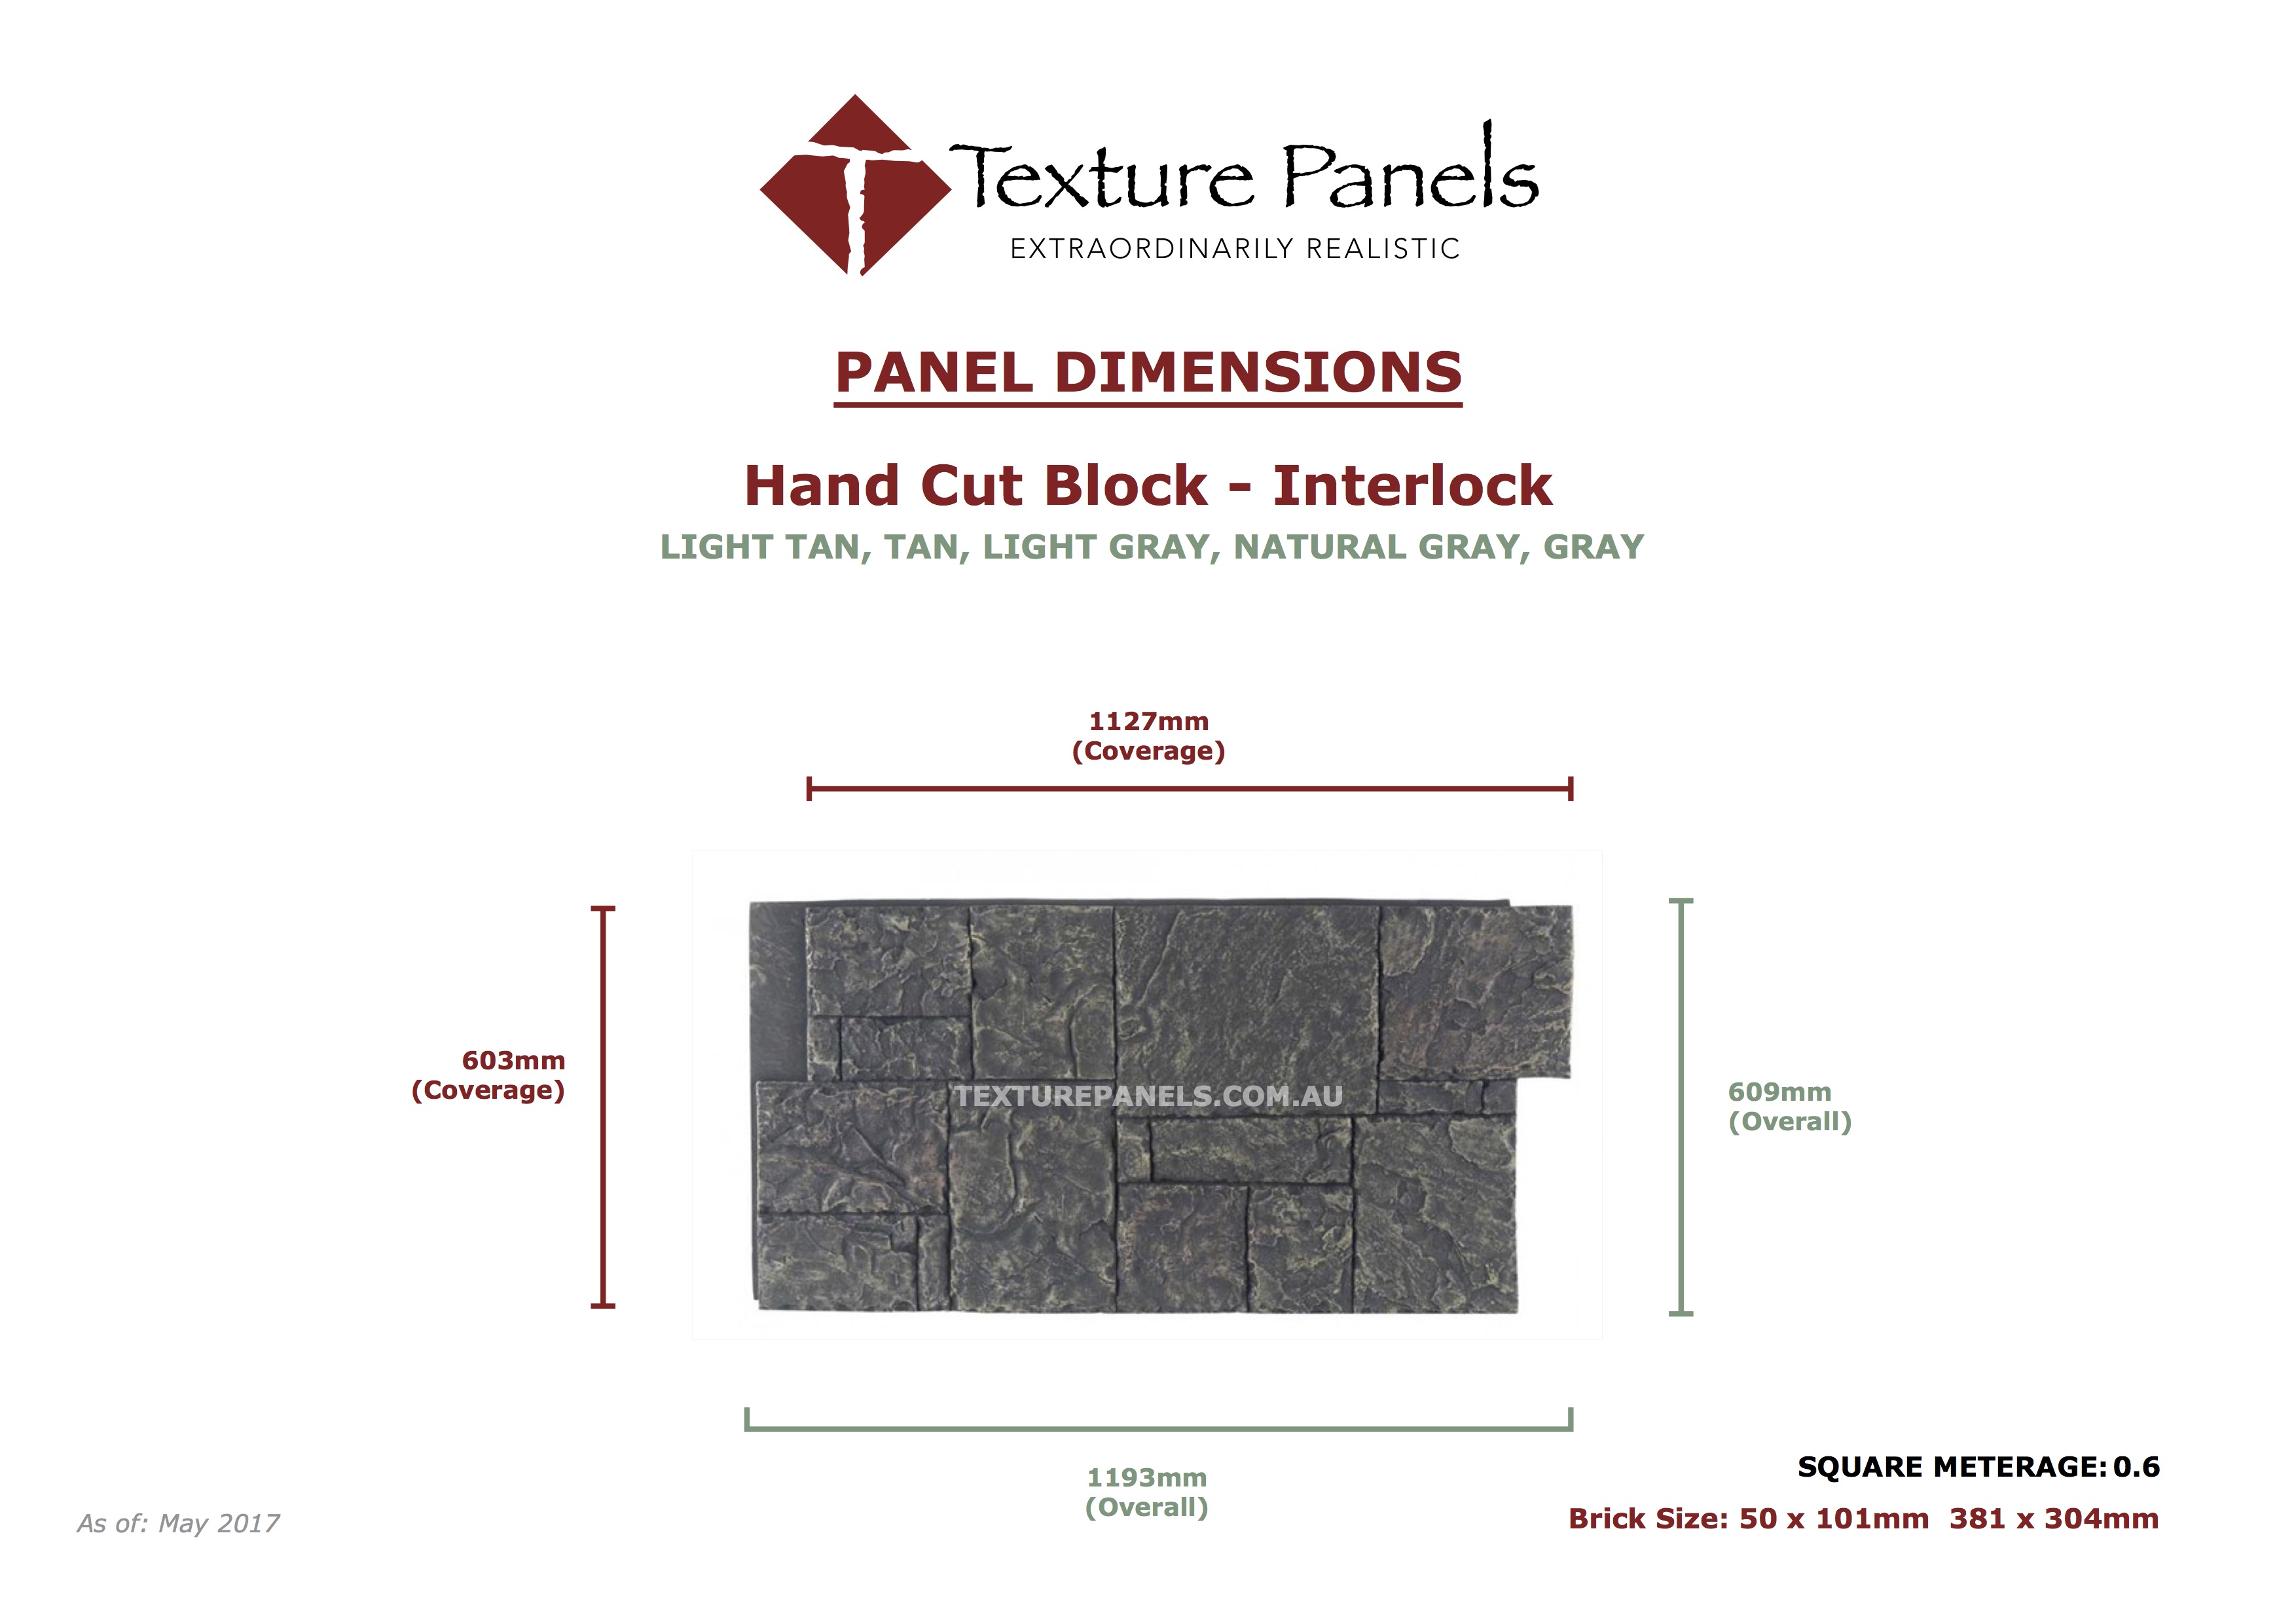 Hand Cut Block Faux Wall Panels Interlock - Dimensions